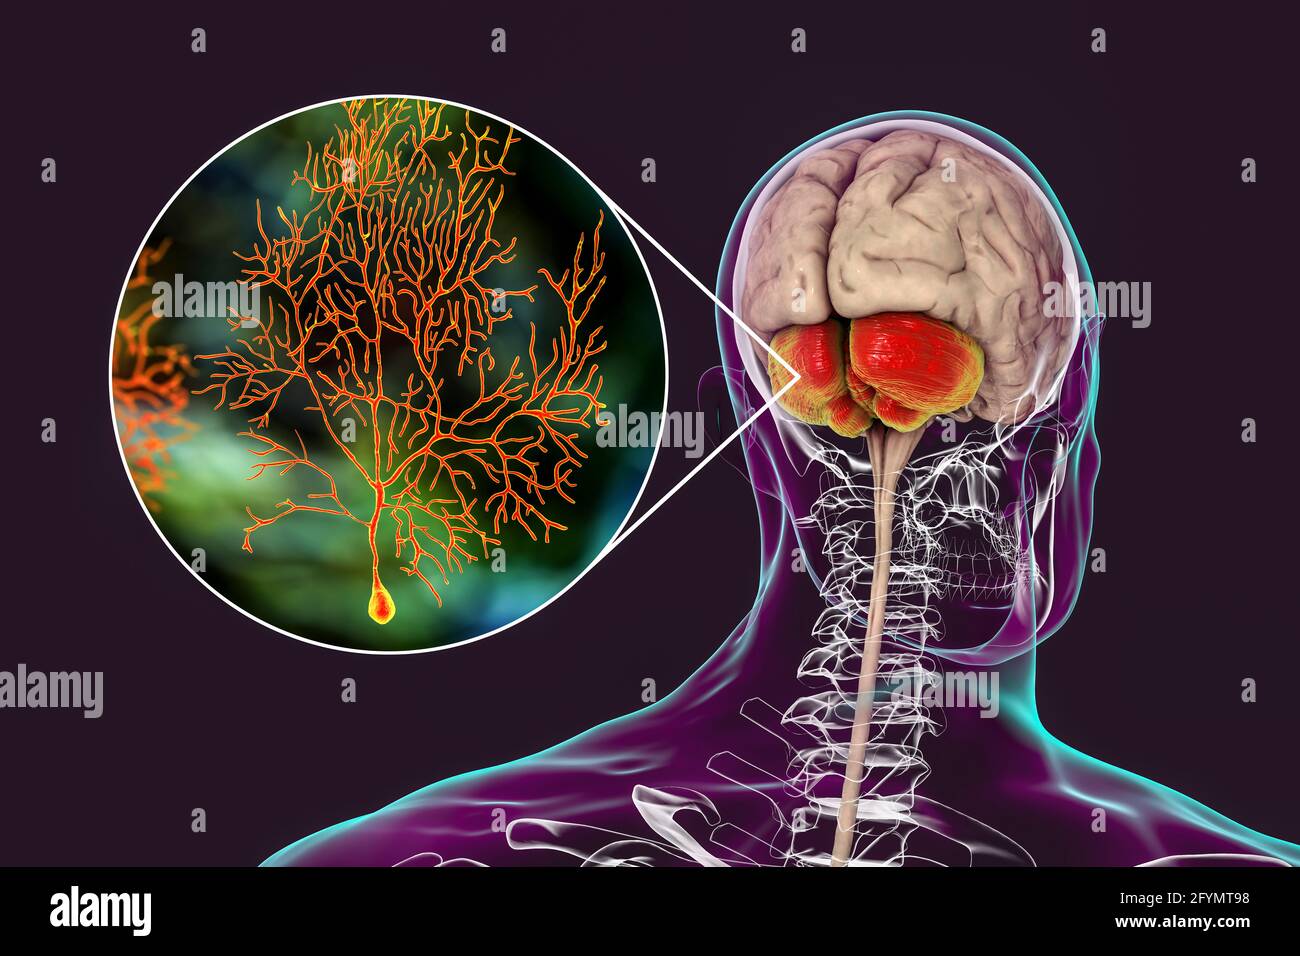 Human cerebellum and Purkinje neurons, illustration Stock Photo